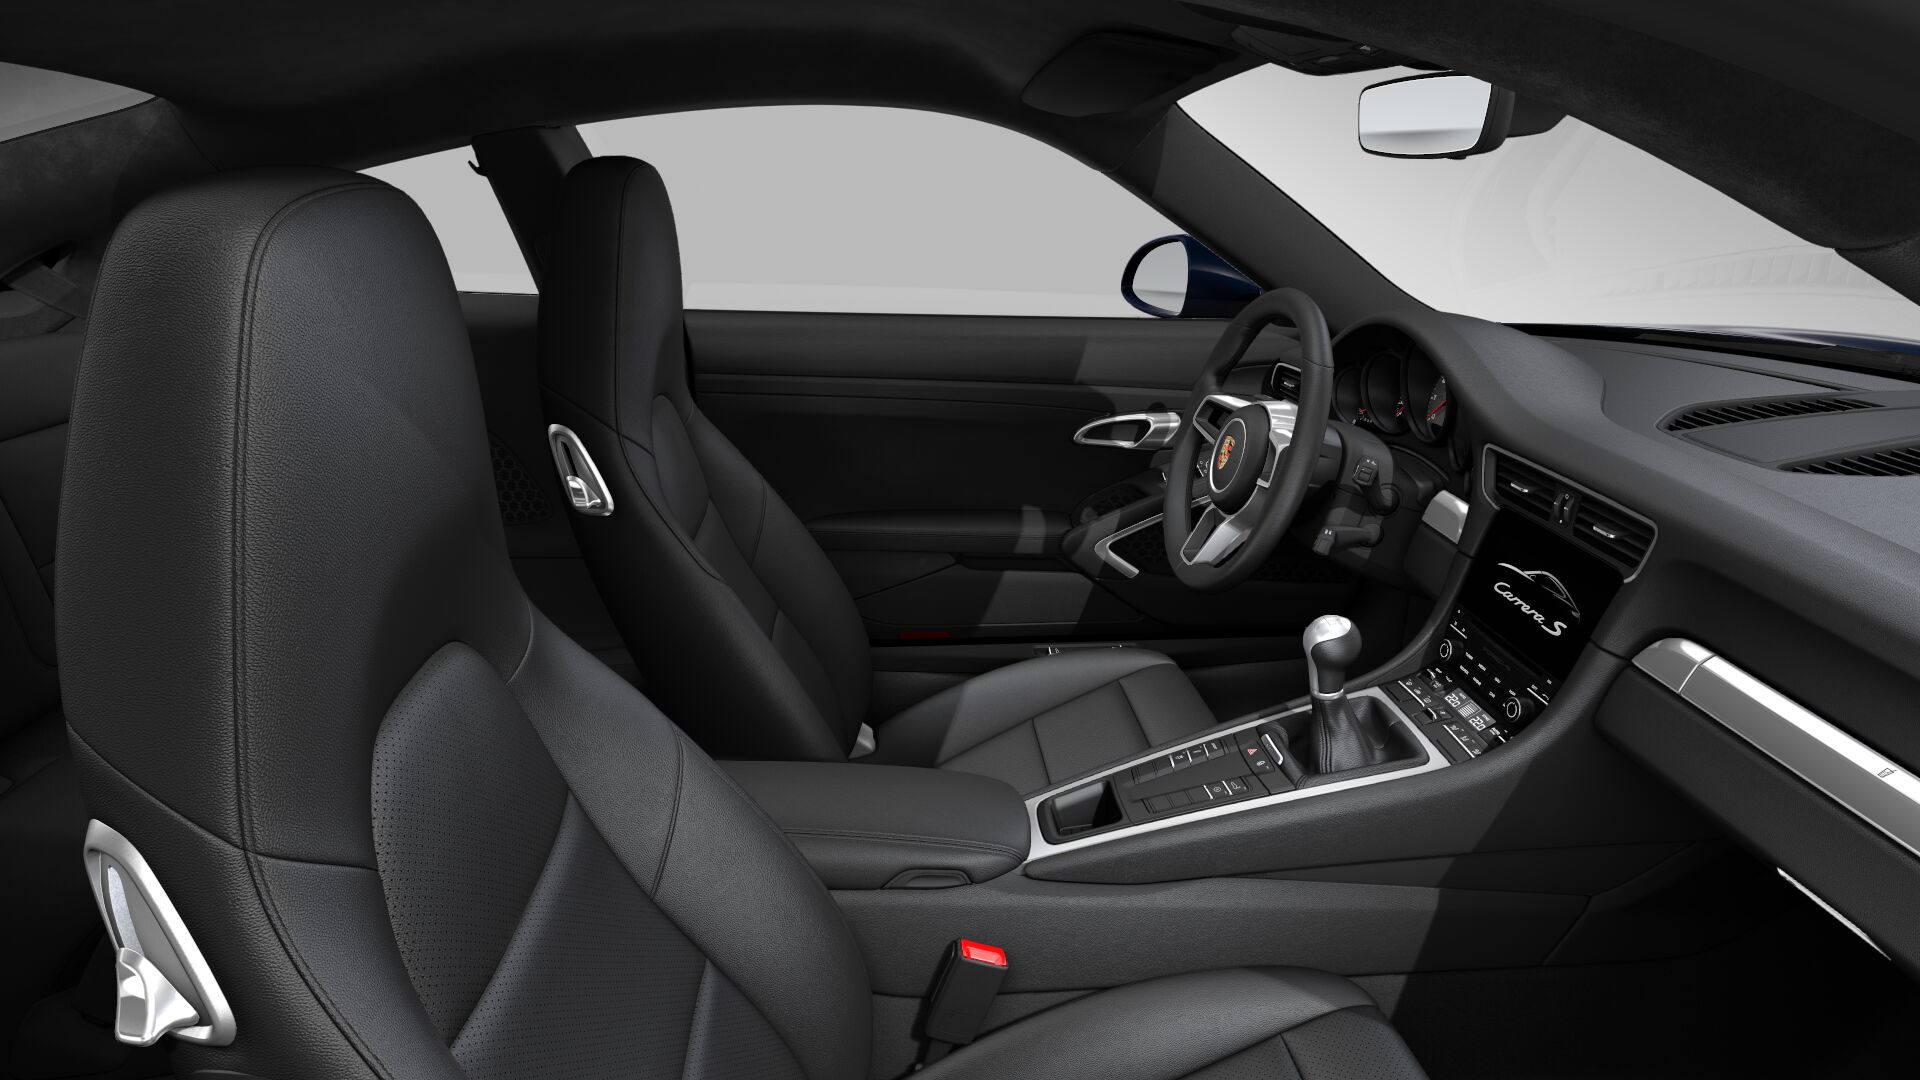 Porsche 911 Carrera S interior seat view